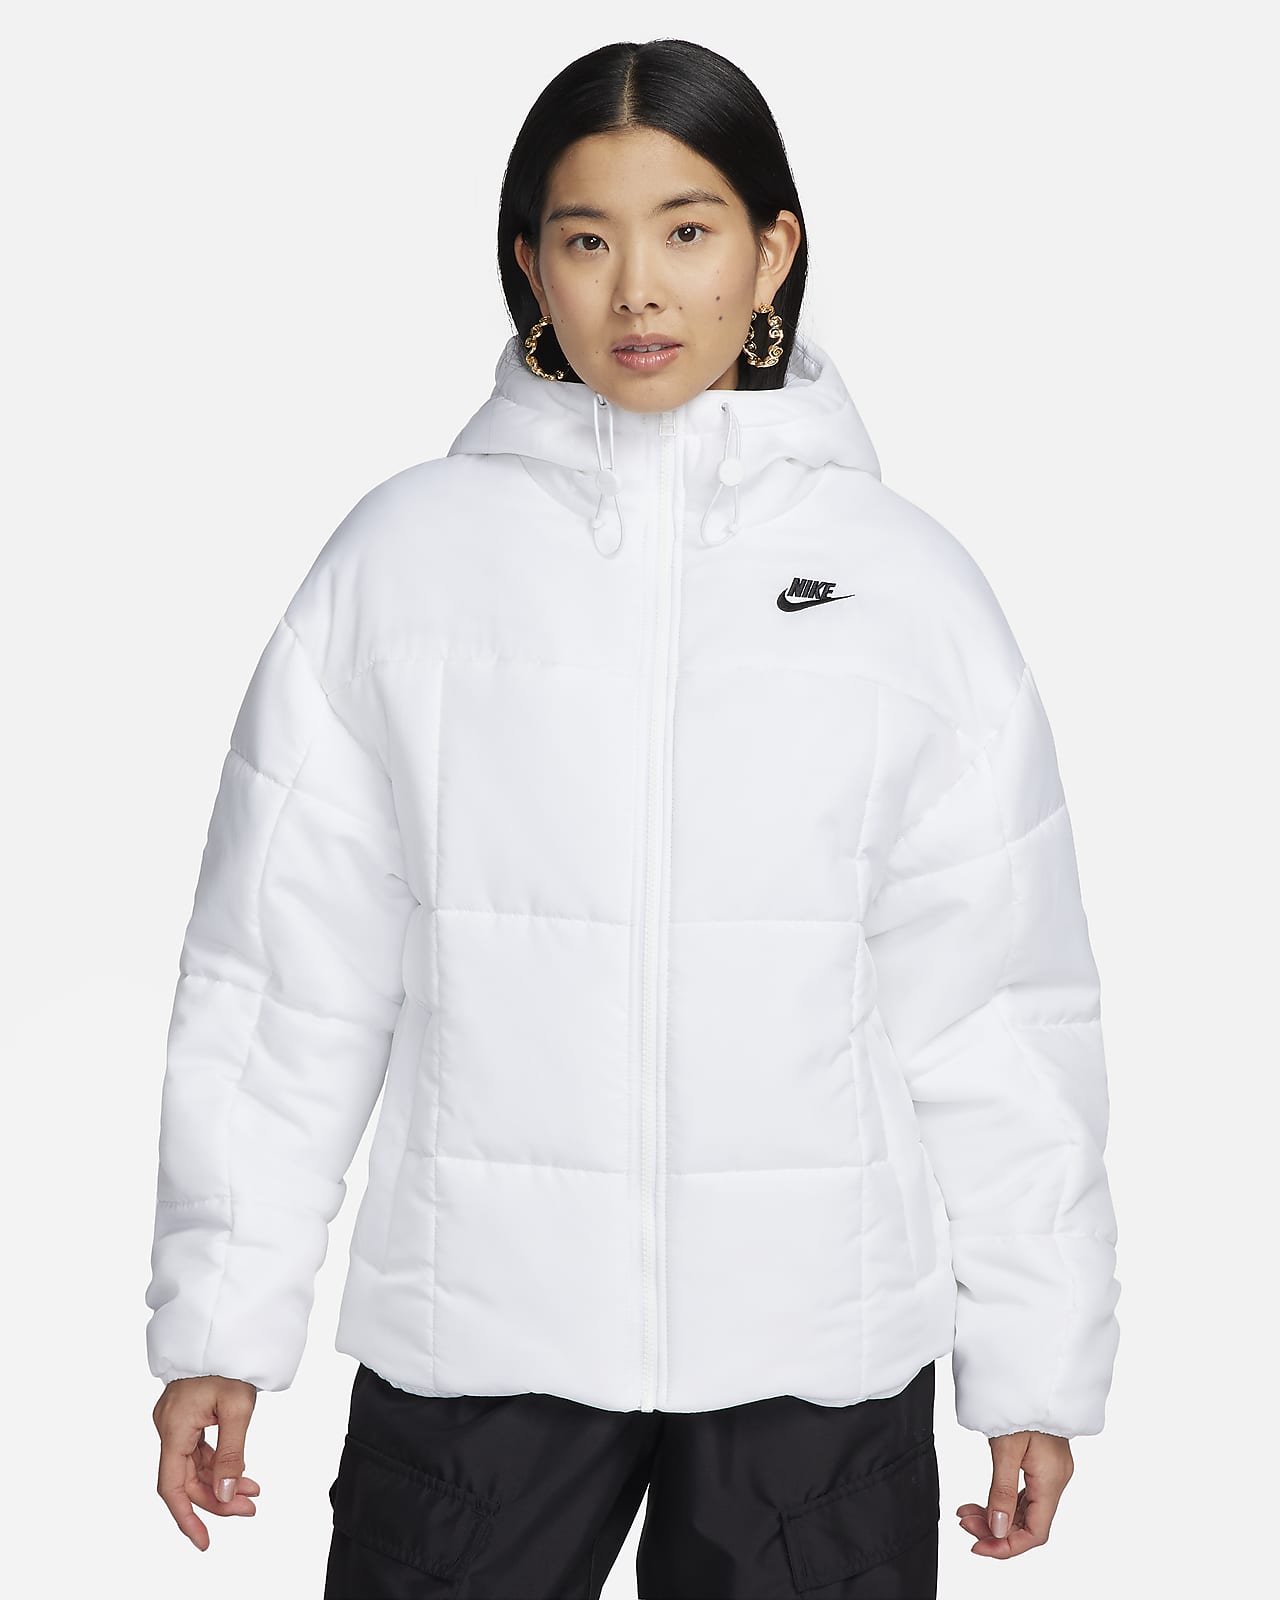 Women Nike Jacket RN 56323 CA 05553 Size Small | eBay